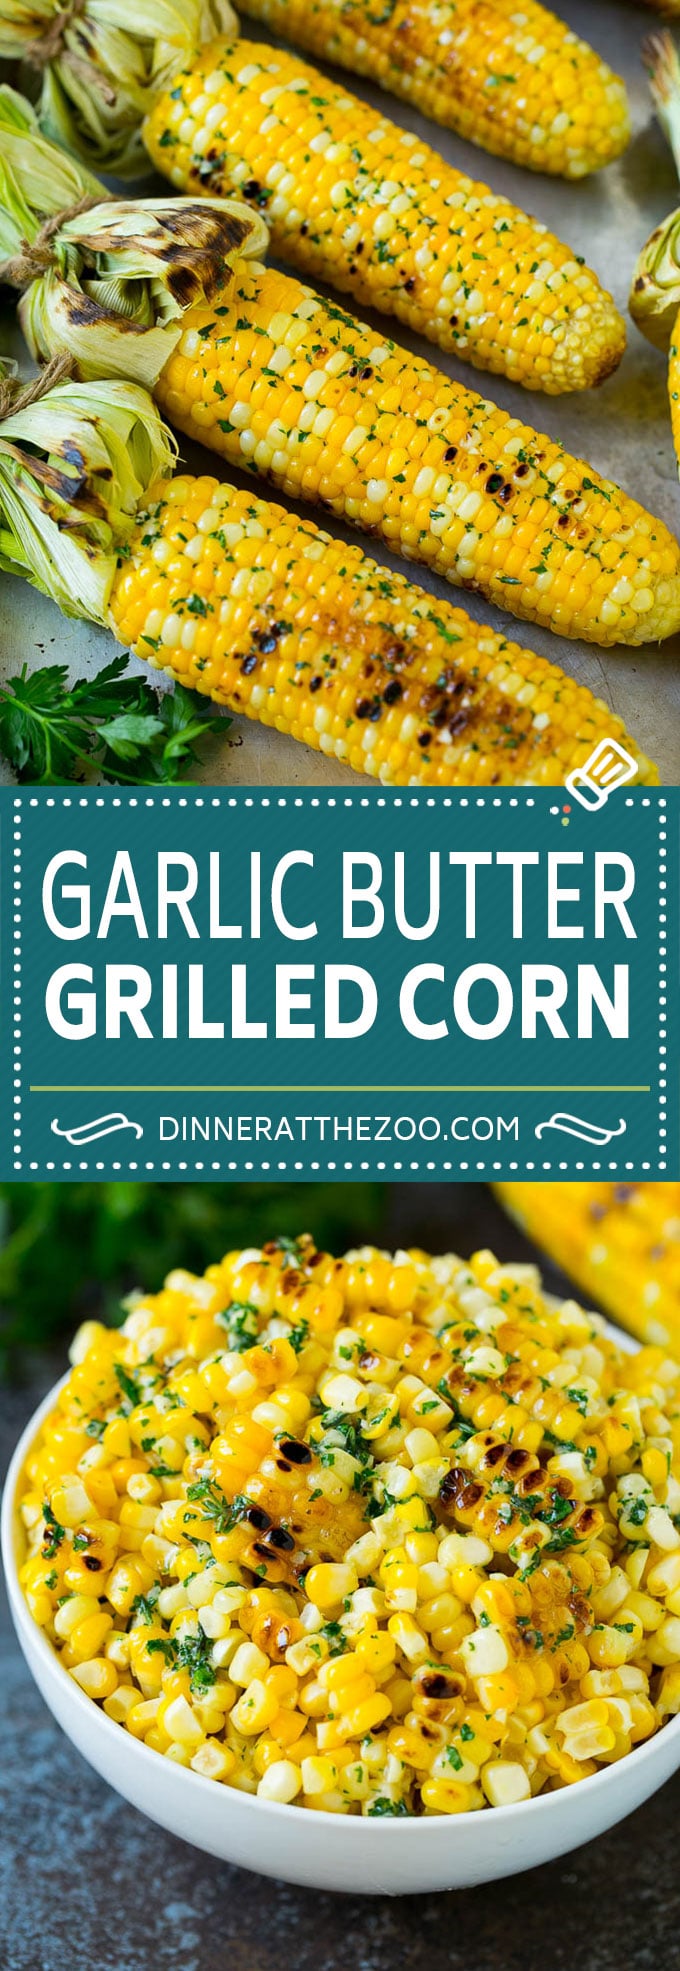 Grilled Corn on the Cob Recipe | Corn Recipe #corn #grilling #summer #sidedish #dinner #dinneratthezoo